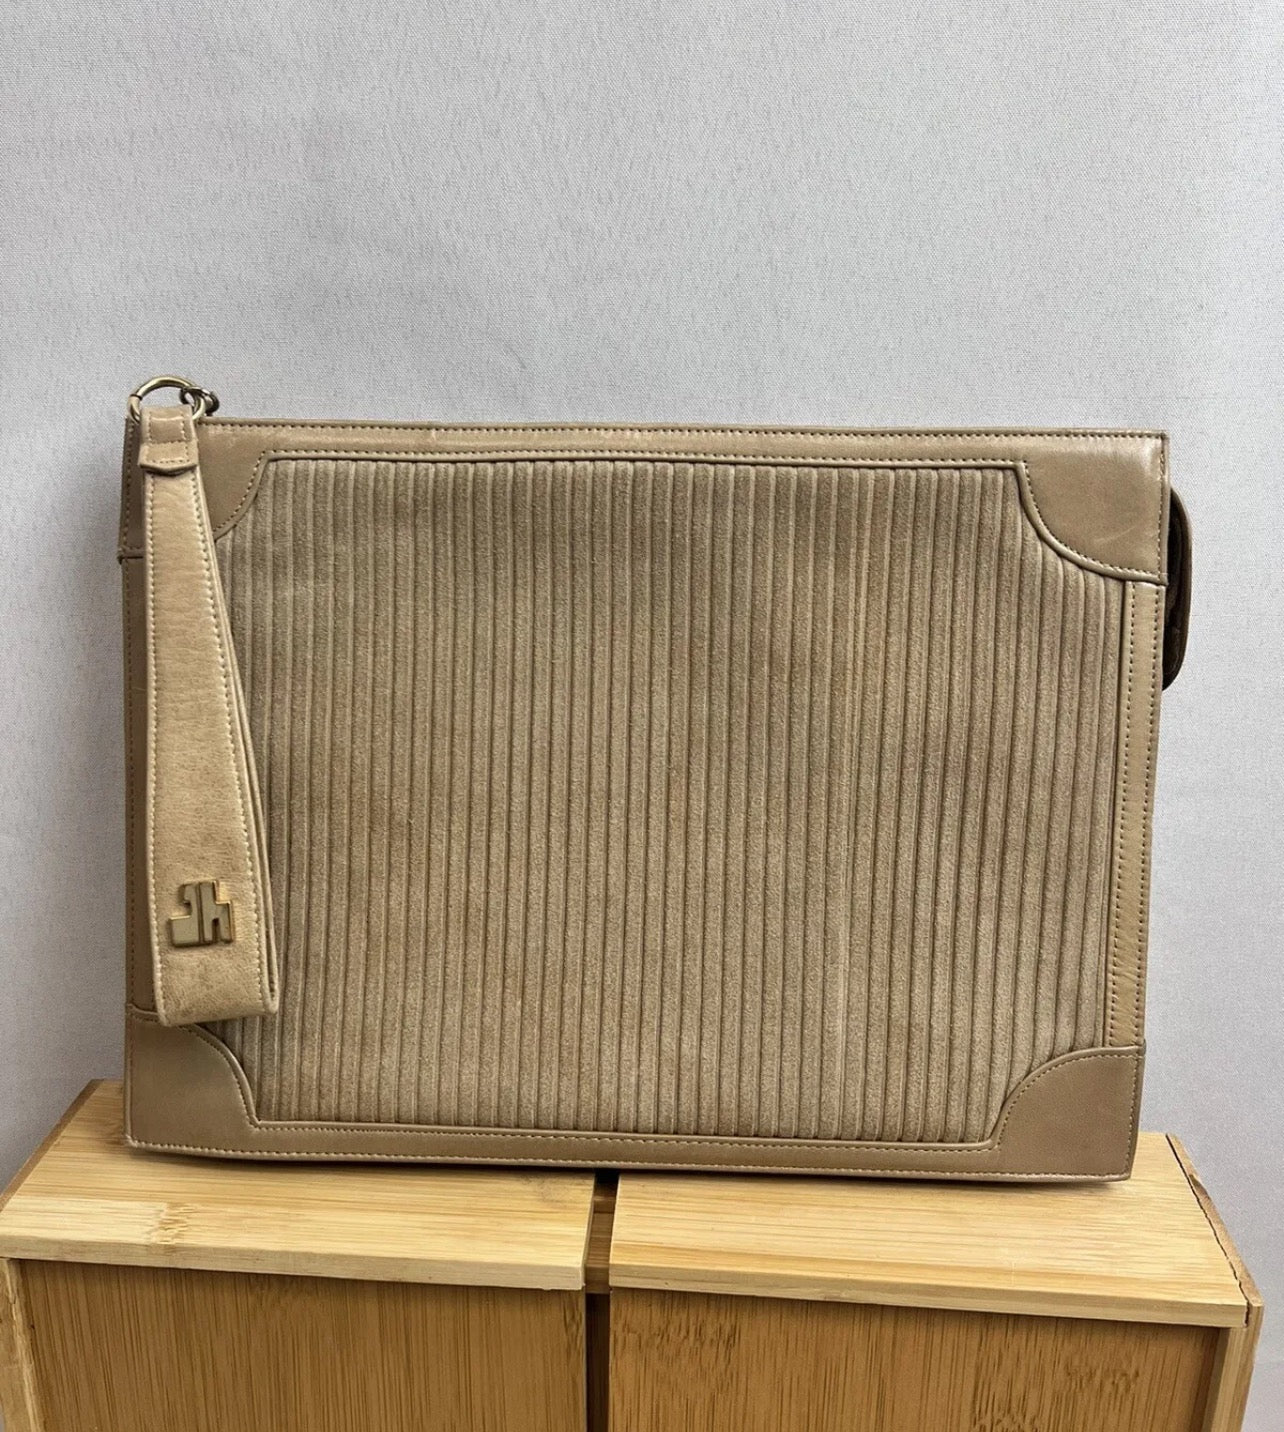 Jay Herbert I.Magnin Vintage Suede and Leather Clutch Handbag Purse